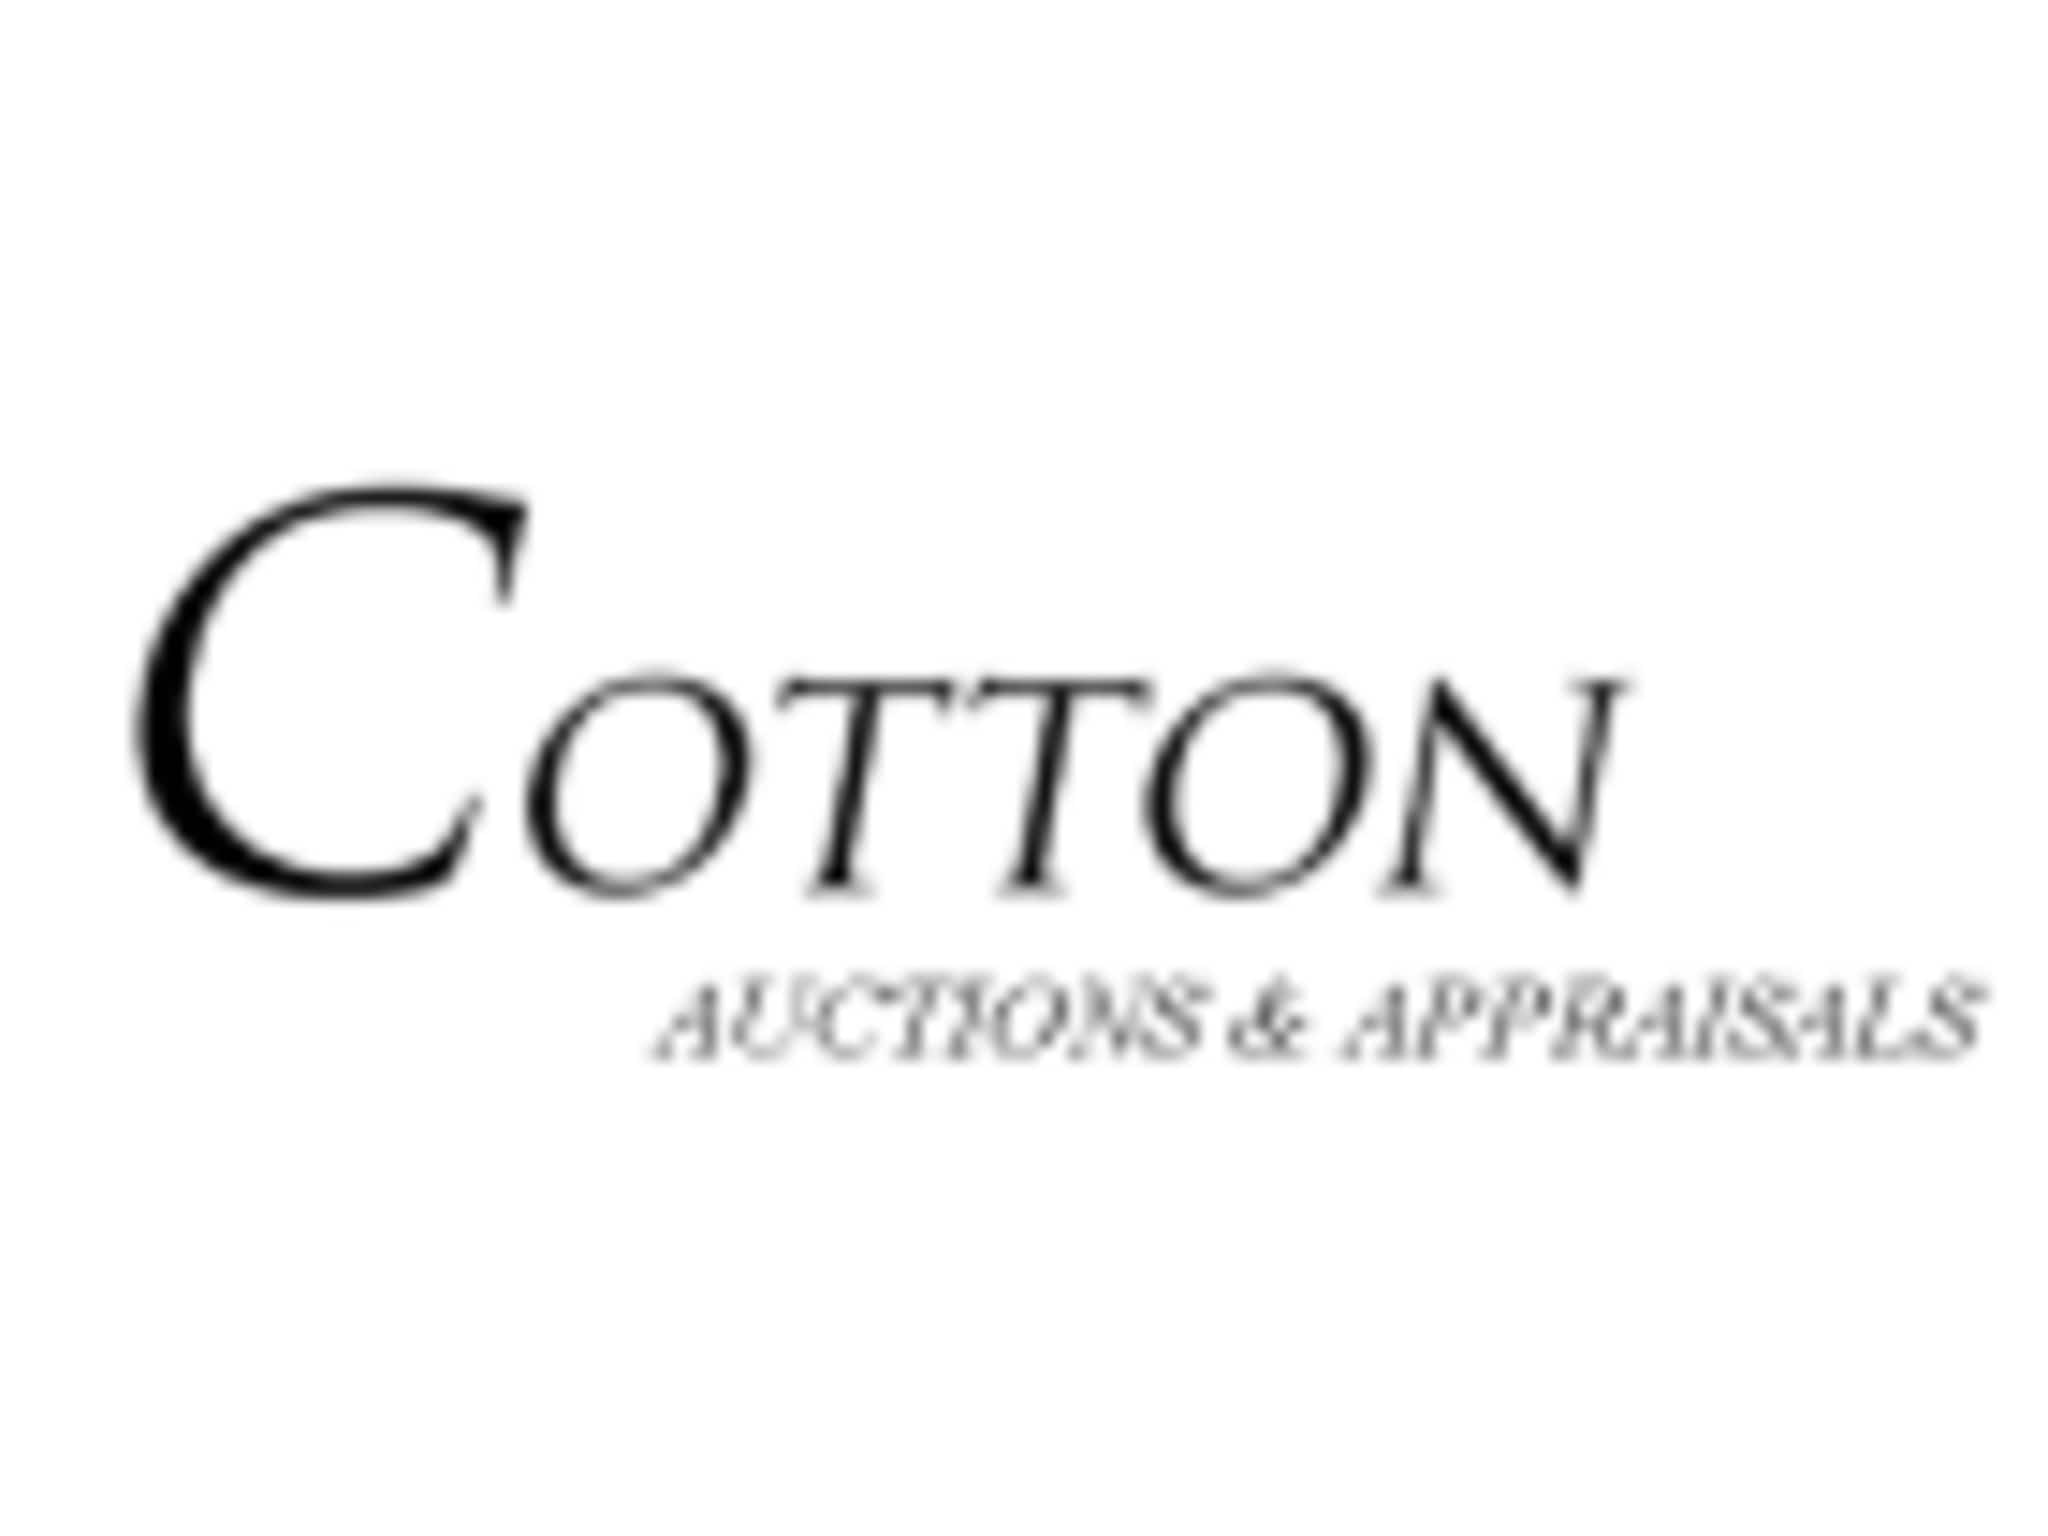 photo Cotton Auctions and Appraisals